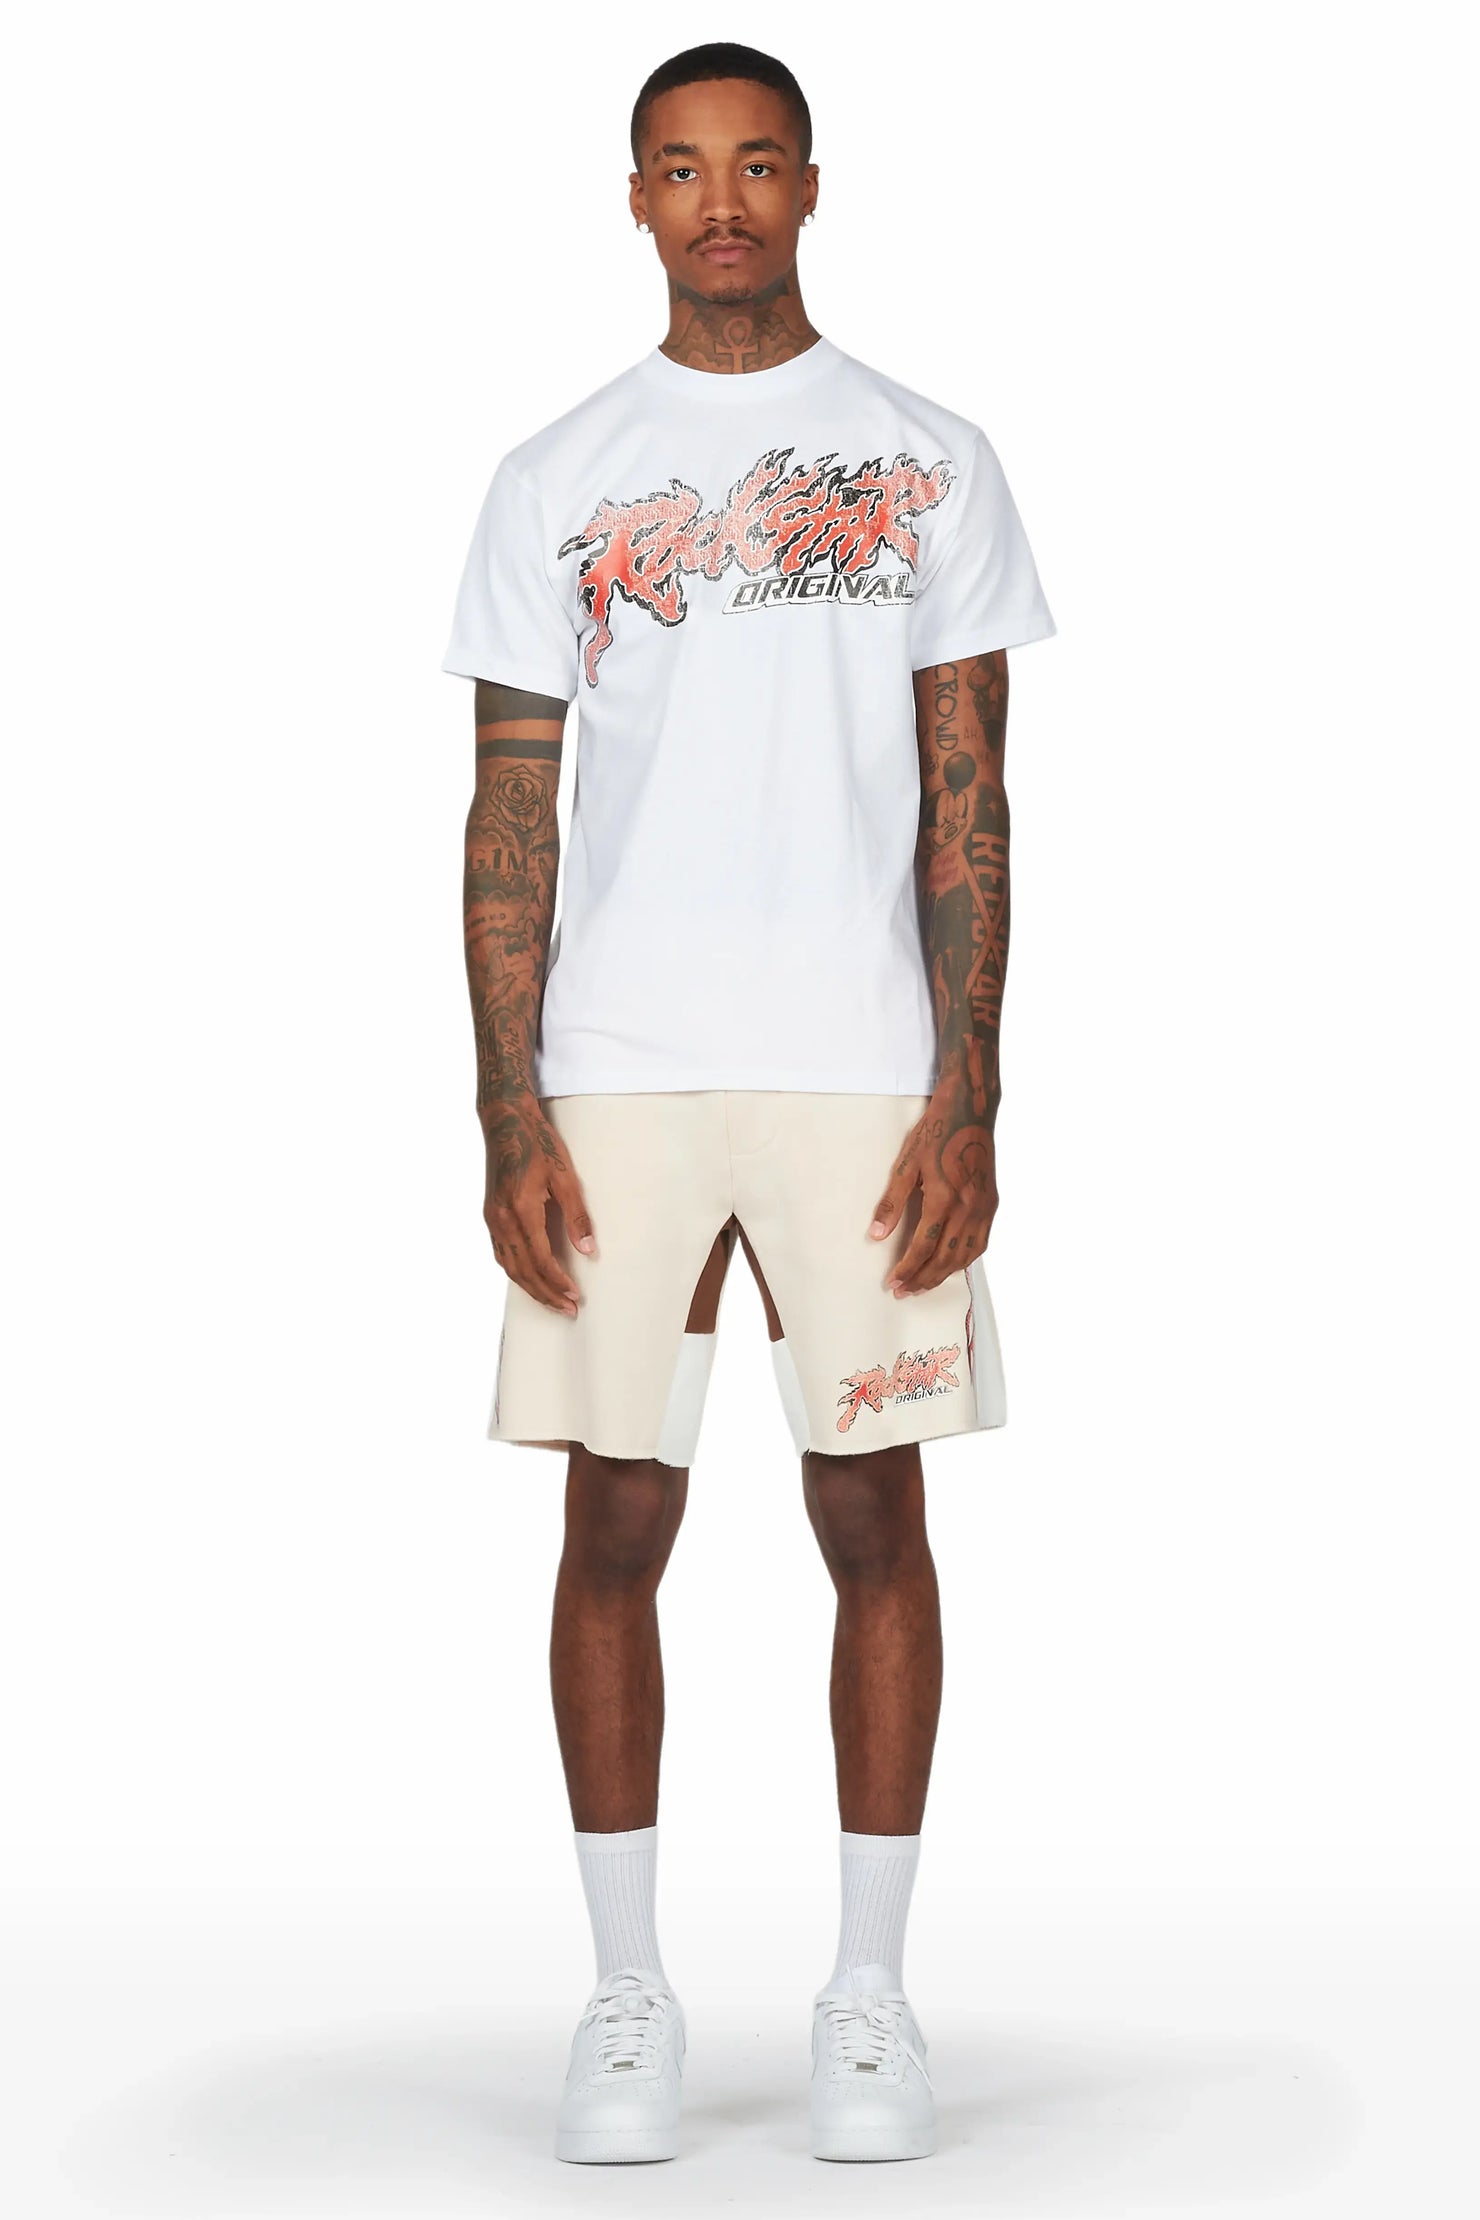 Yash White/Beige T-Shirt Short Set